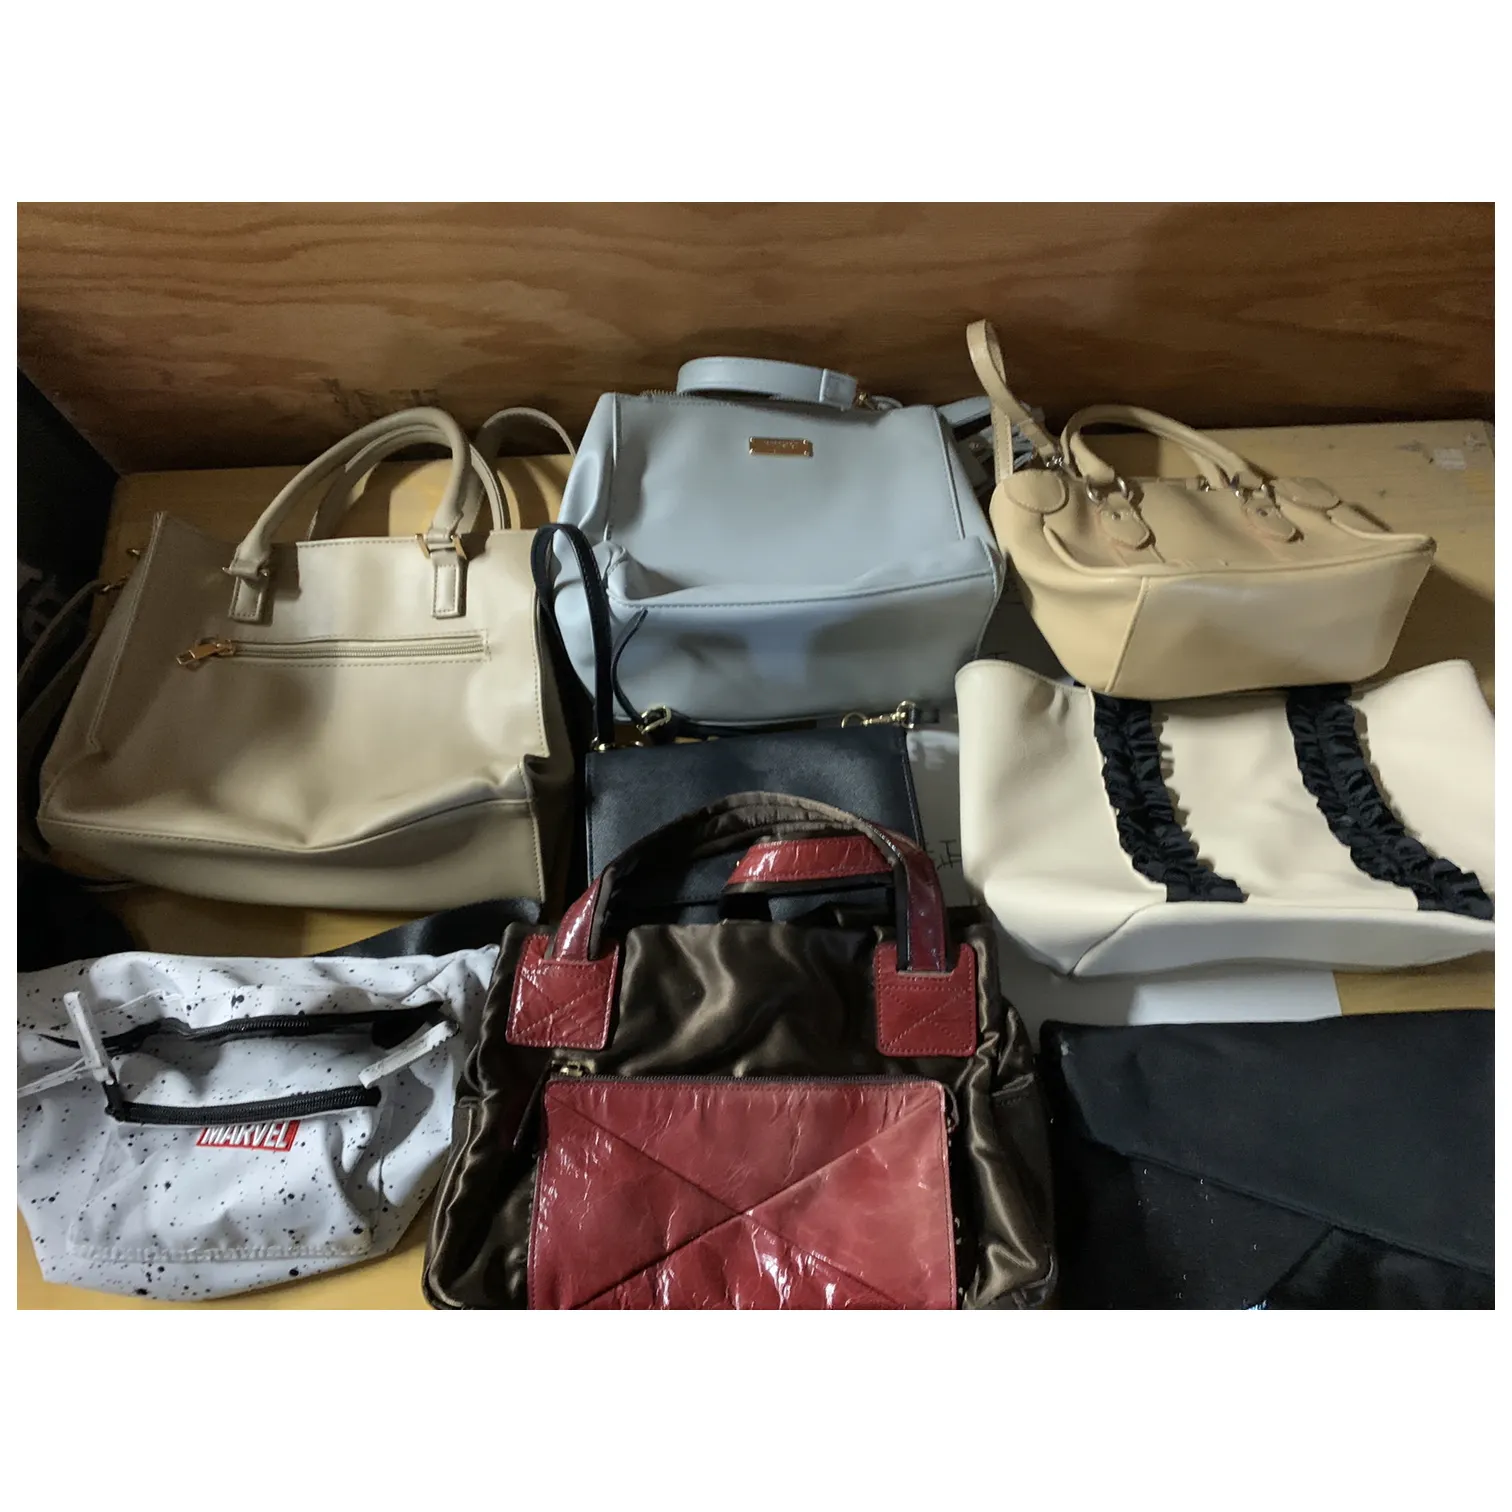 All ages hot selling Japan wholesale used bags women handbags ladies